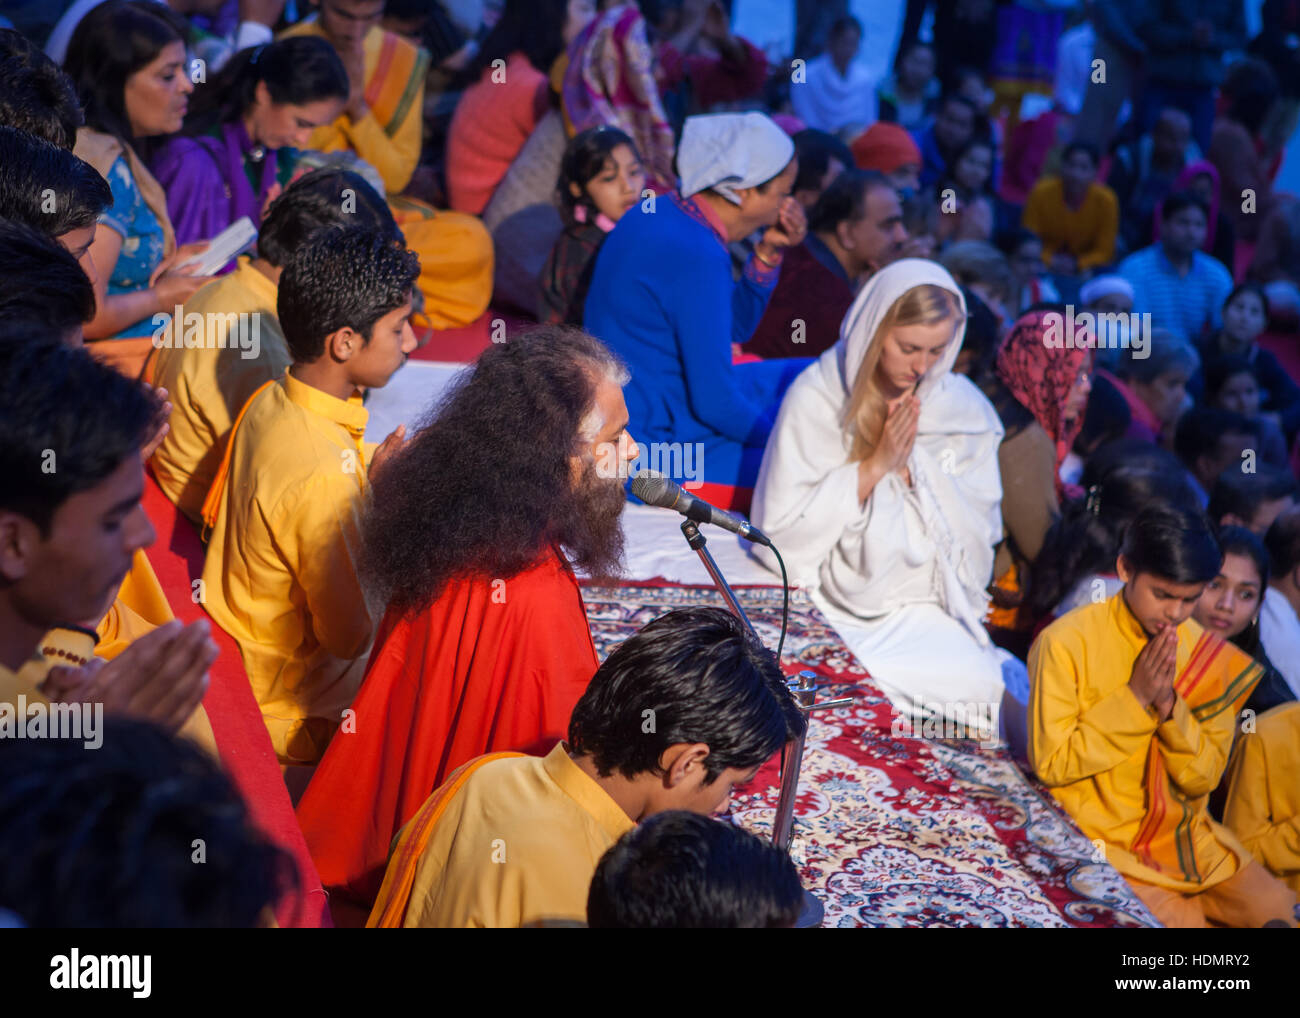 Evening Ganga Aarti Ceremony at the Parmarth Niketan Ashram in Rishikesh,Uttarakhand,India Stock Photo